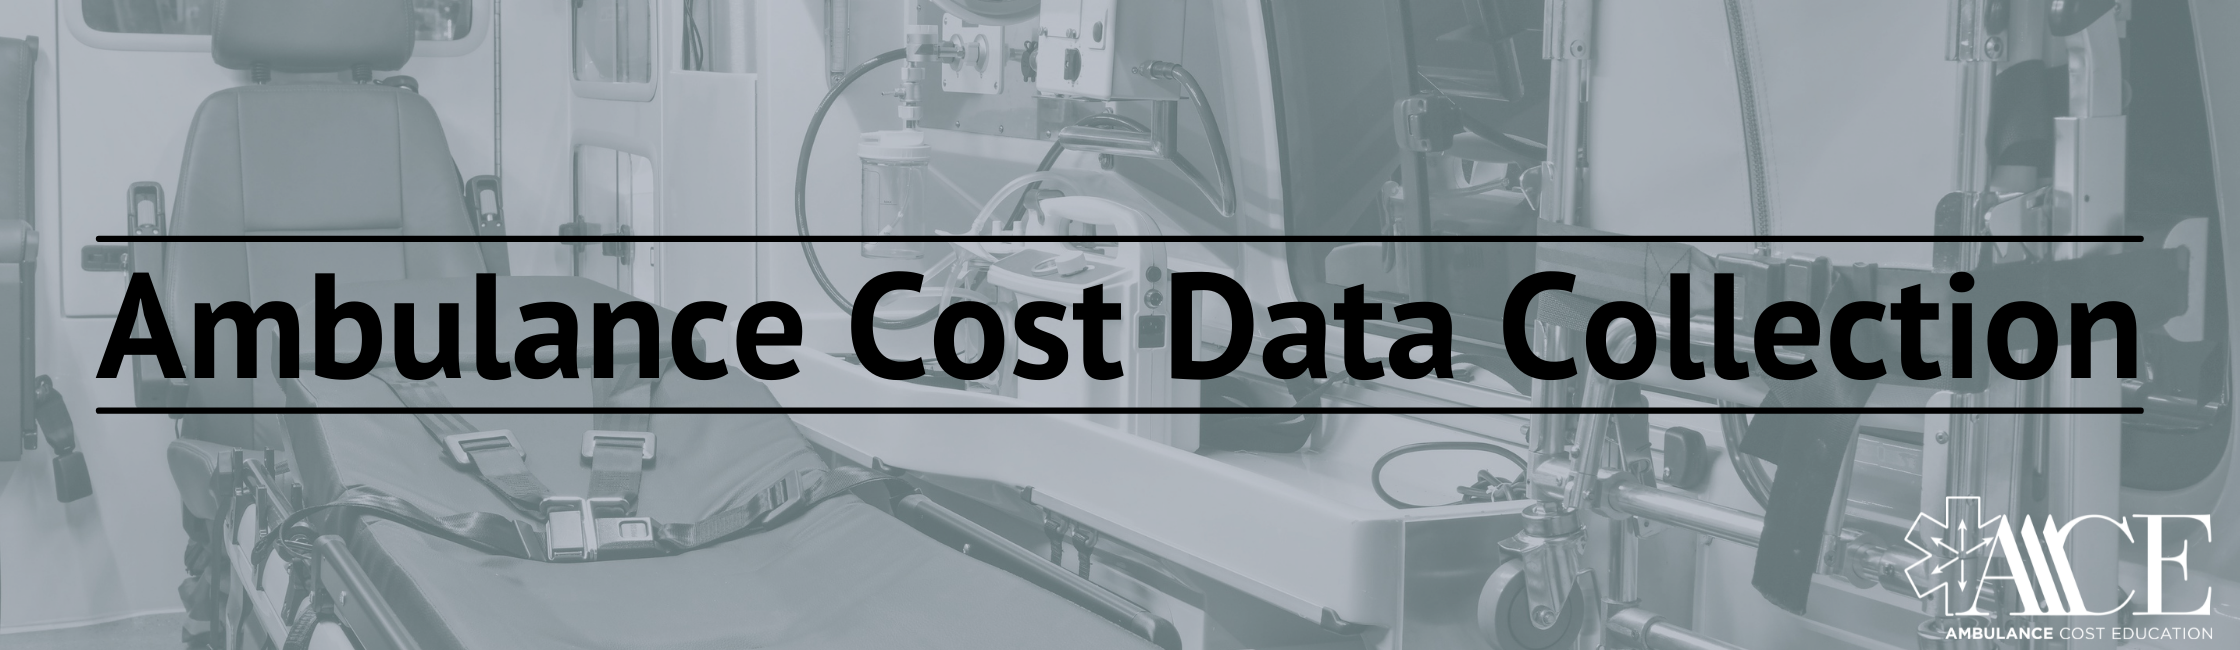 Ambulance Cost Data Collection